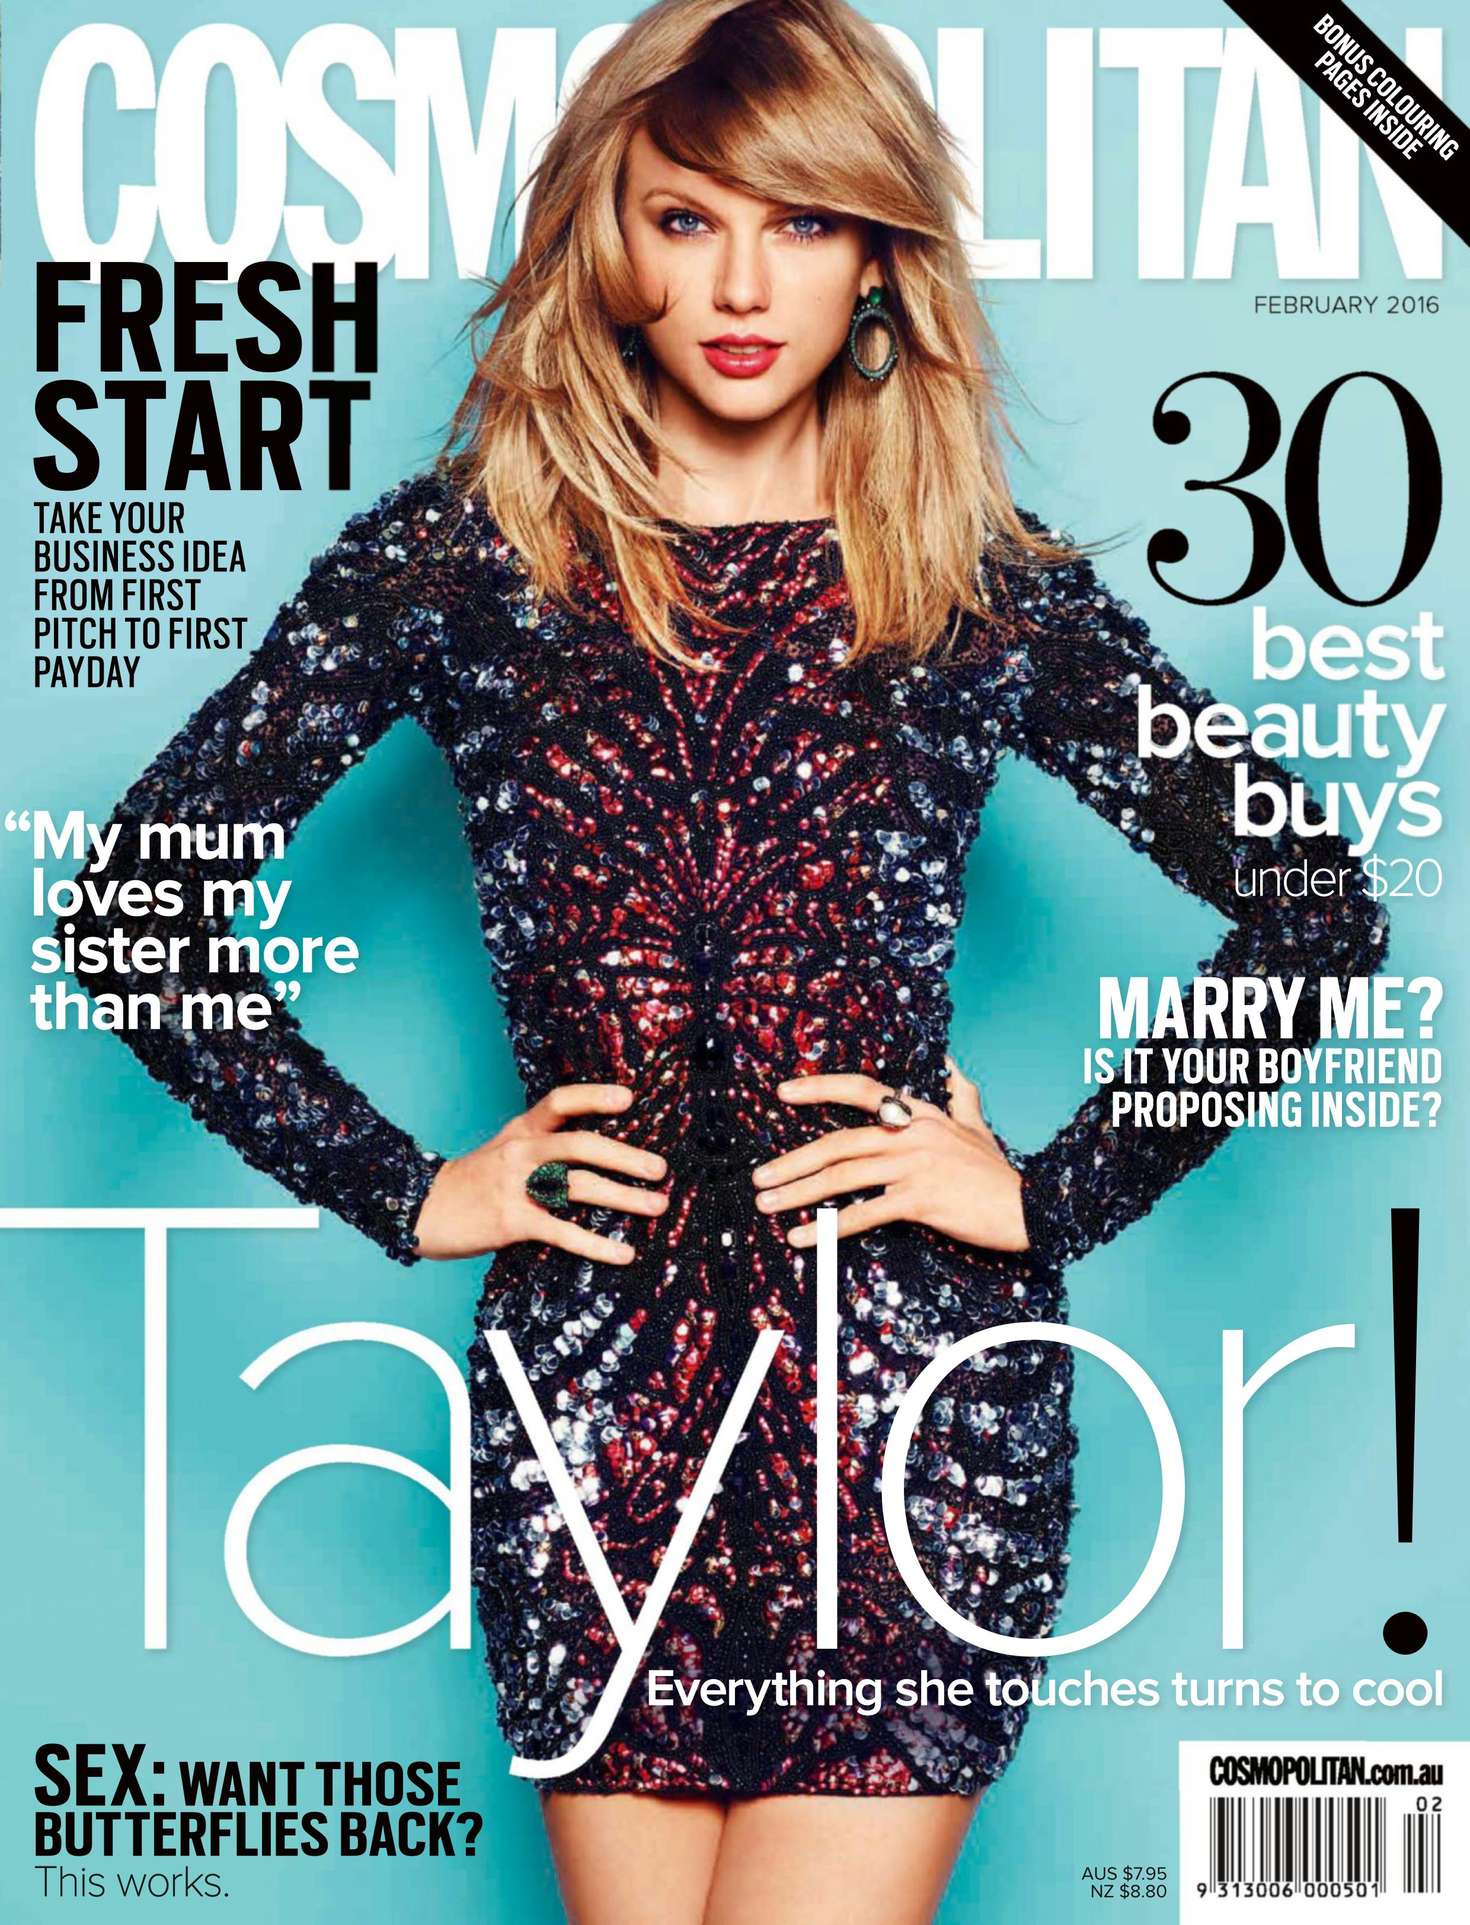 Free Download Taylor Swift Cosmopolitan Australia Magazine February 2016 1470x1925 For Your 